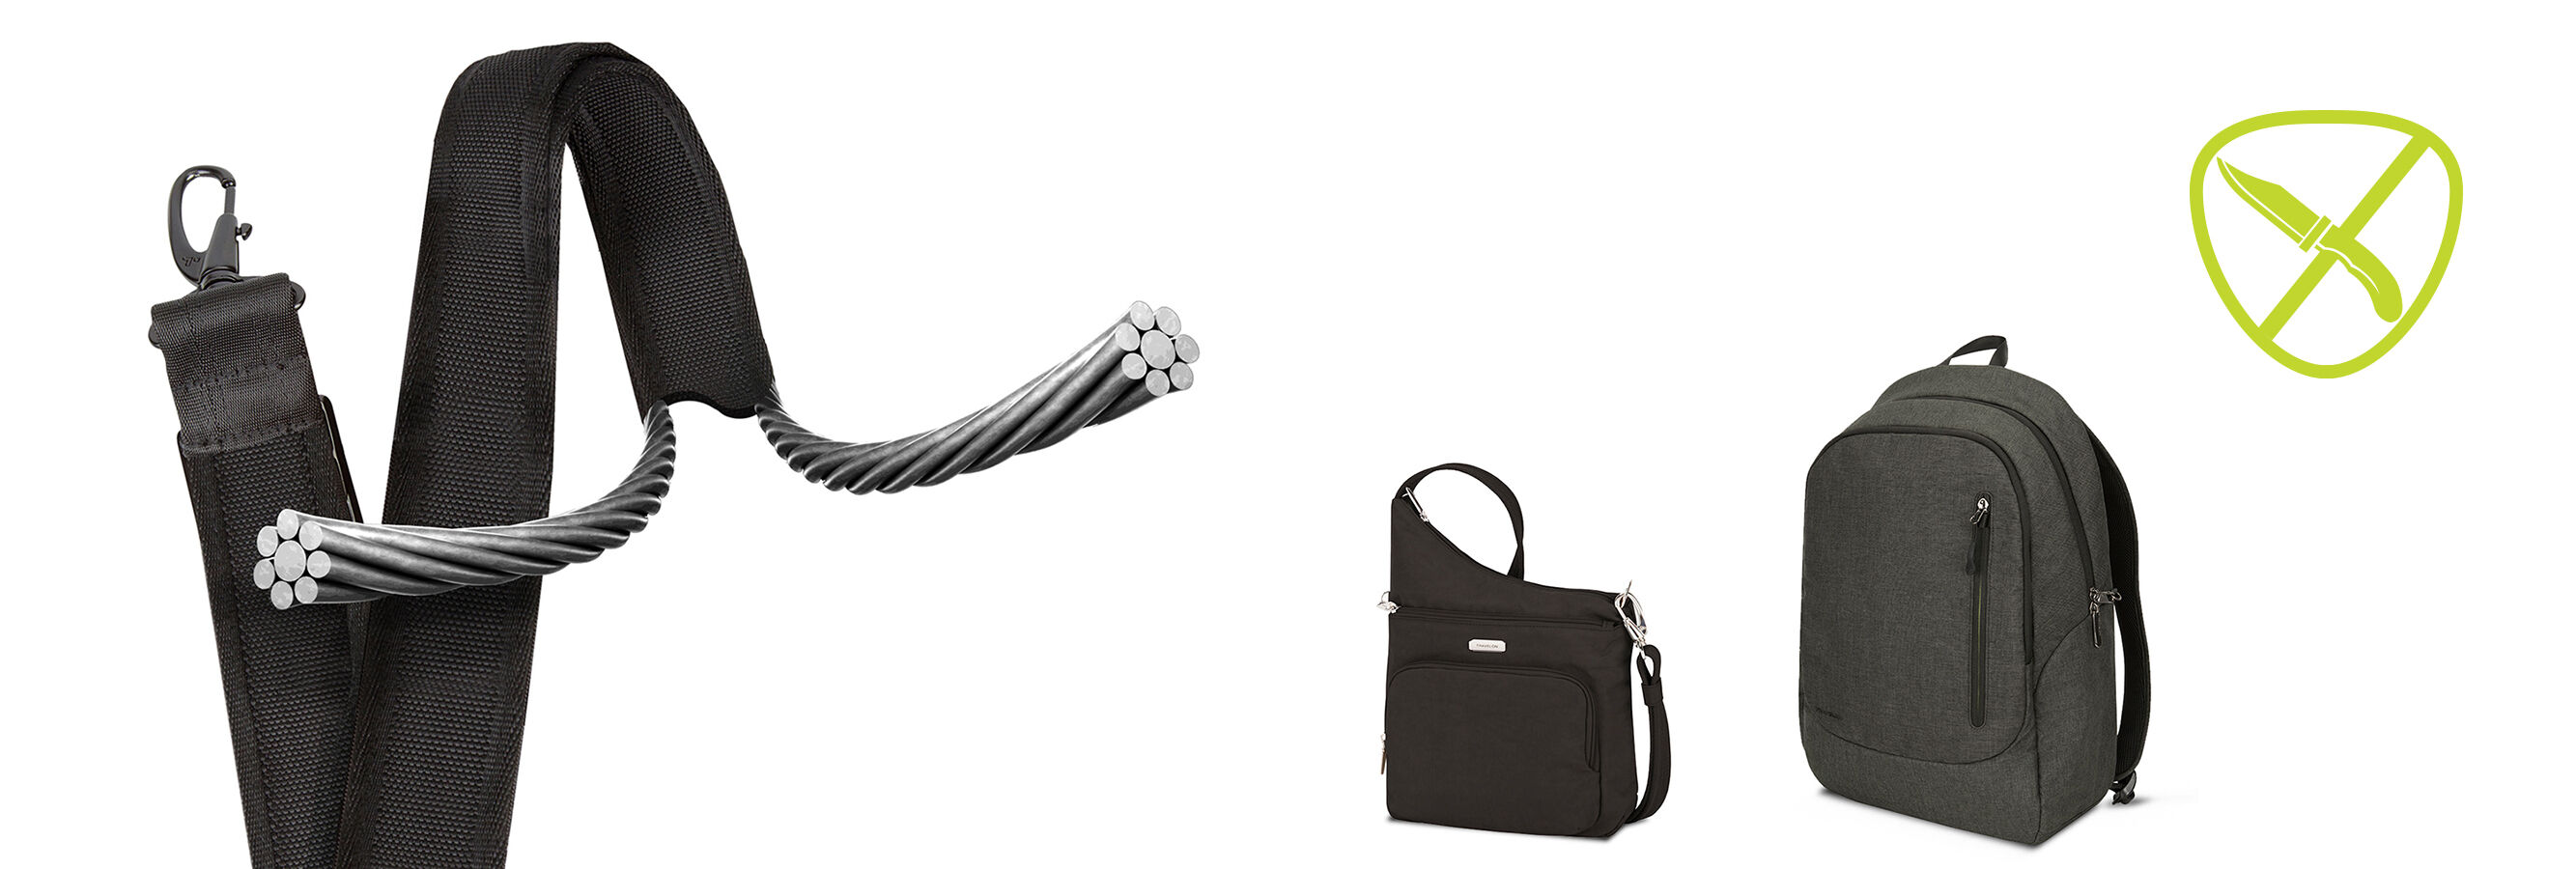 how to fix well worn handbag purse handles straps | Purse handles, Handbag  straps, Handbag repair